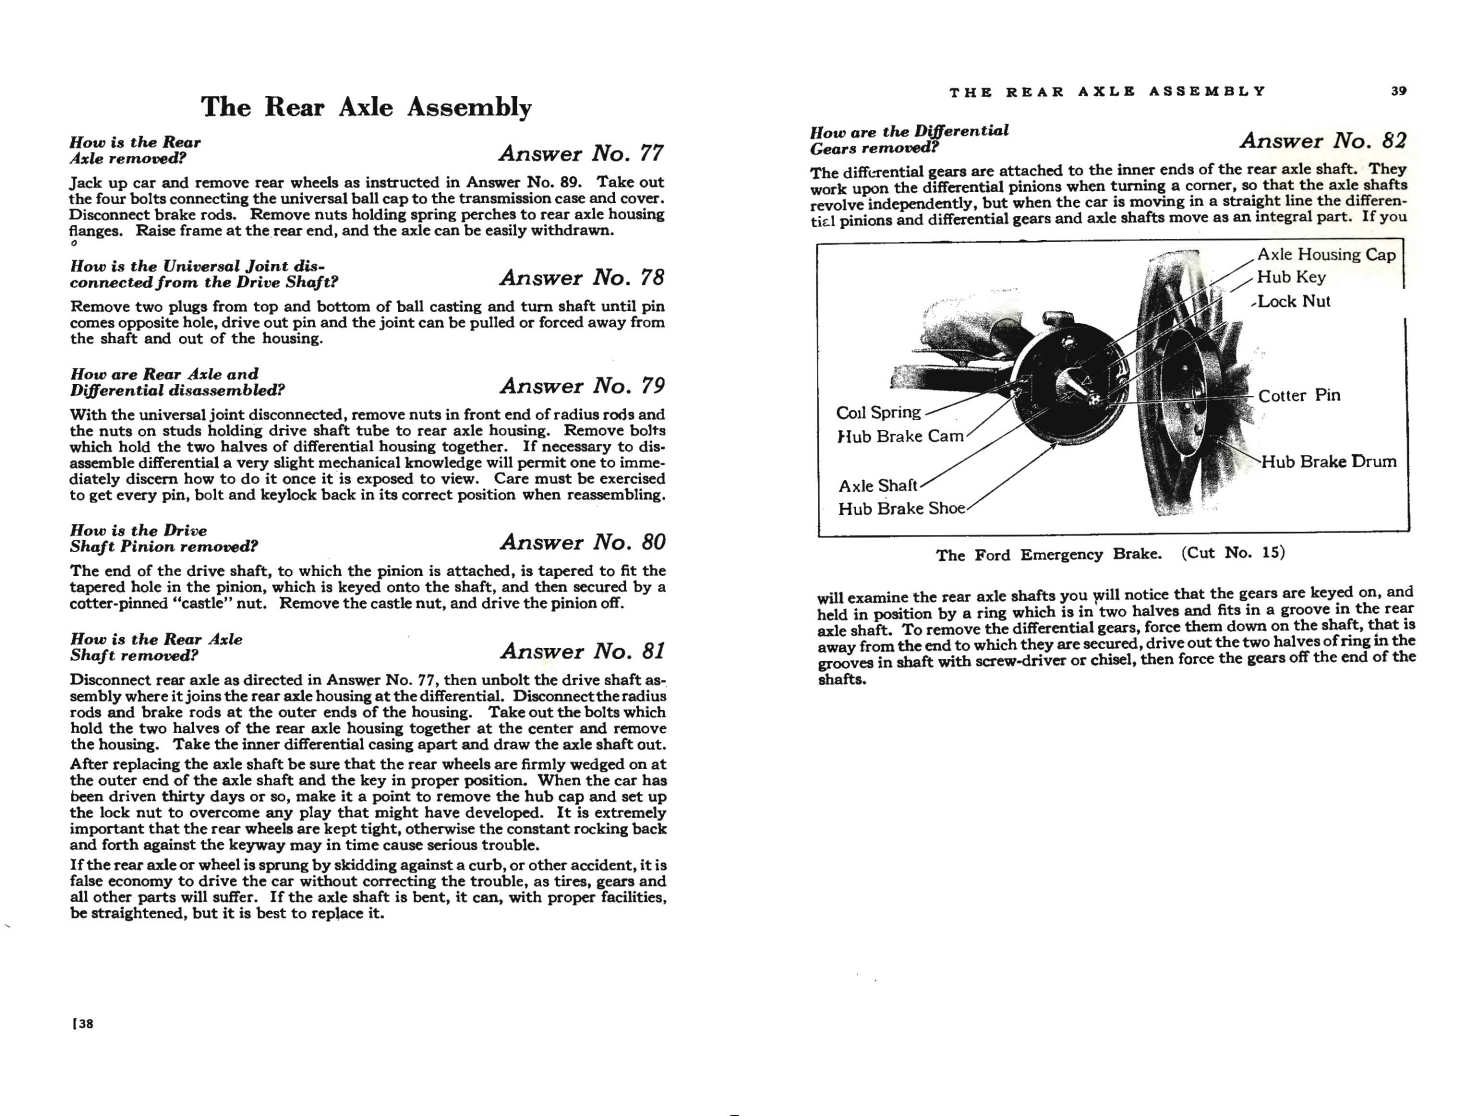 n_1924 Ford Owners Manual-38-39.jpg